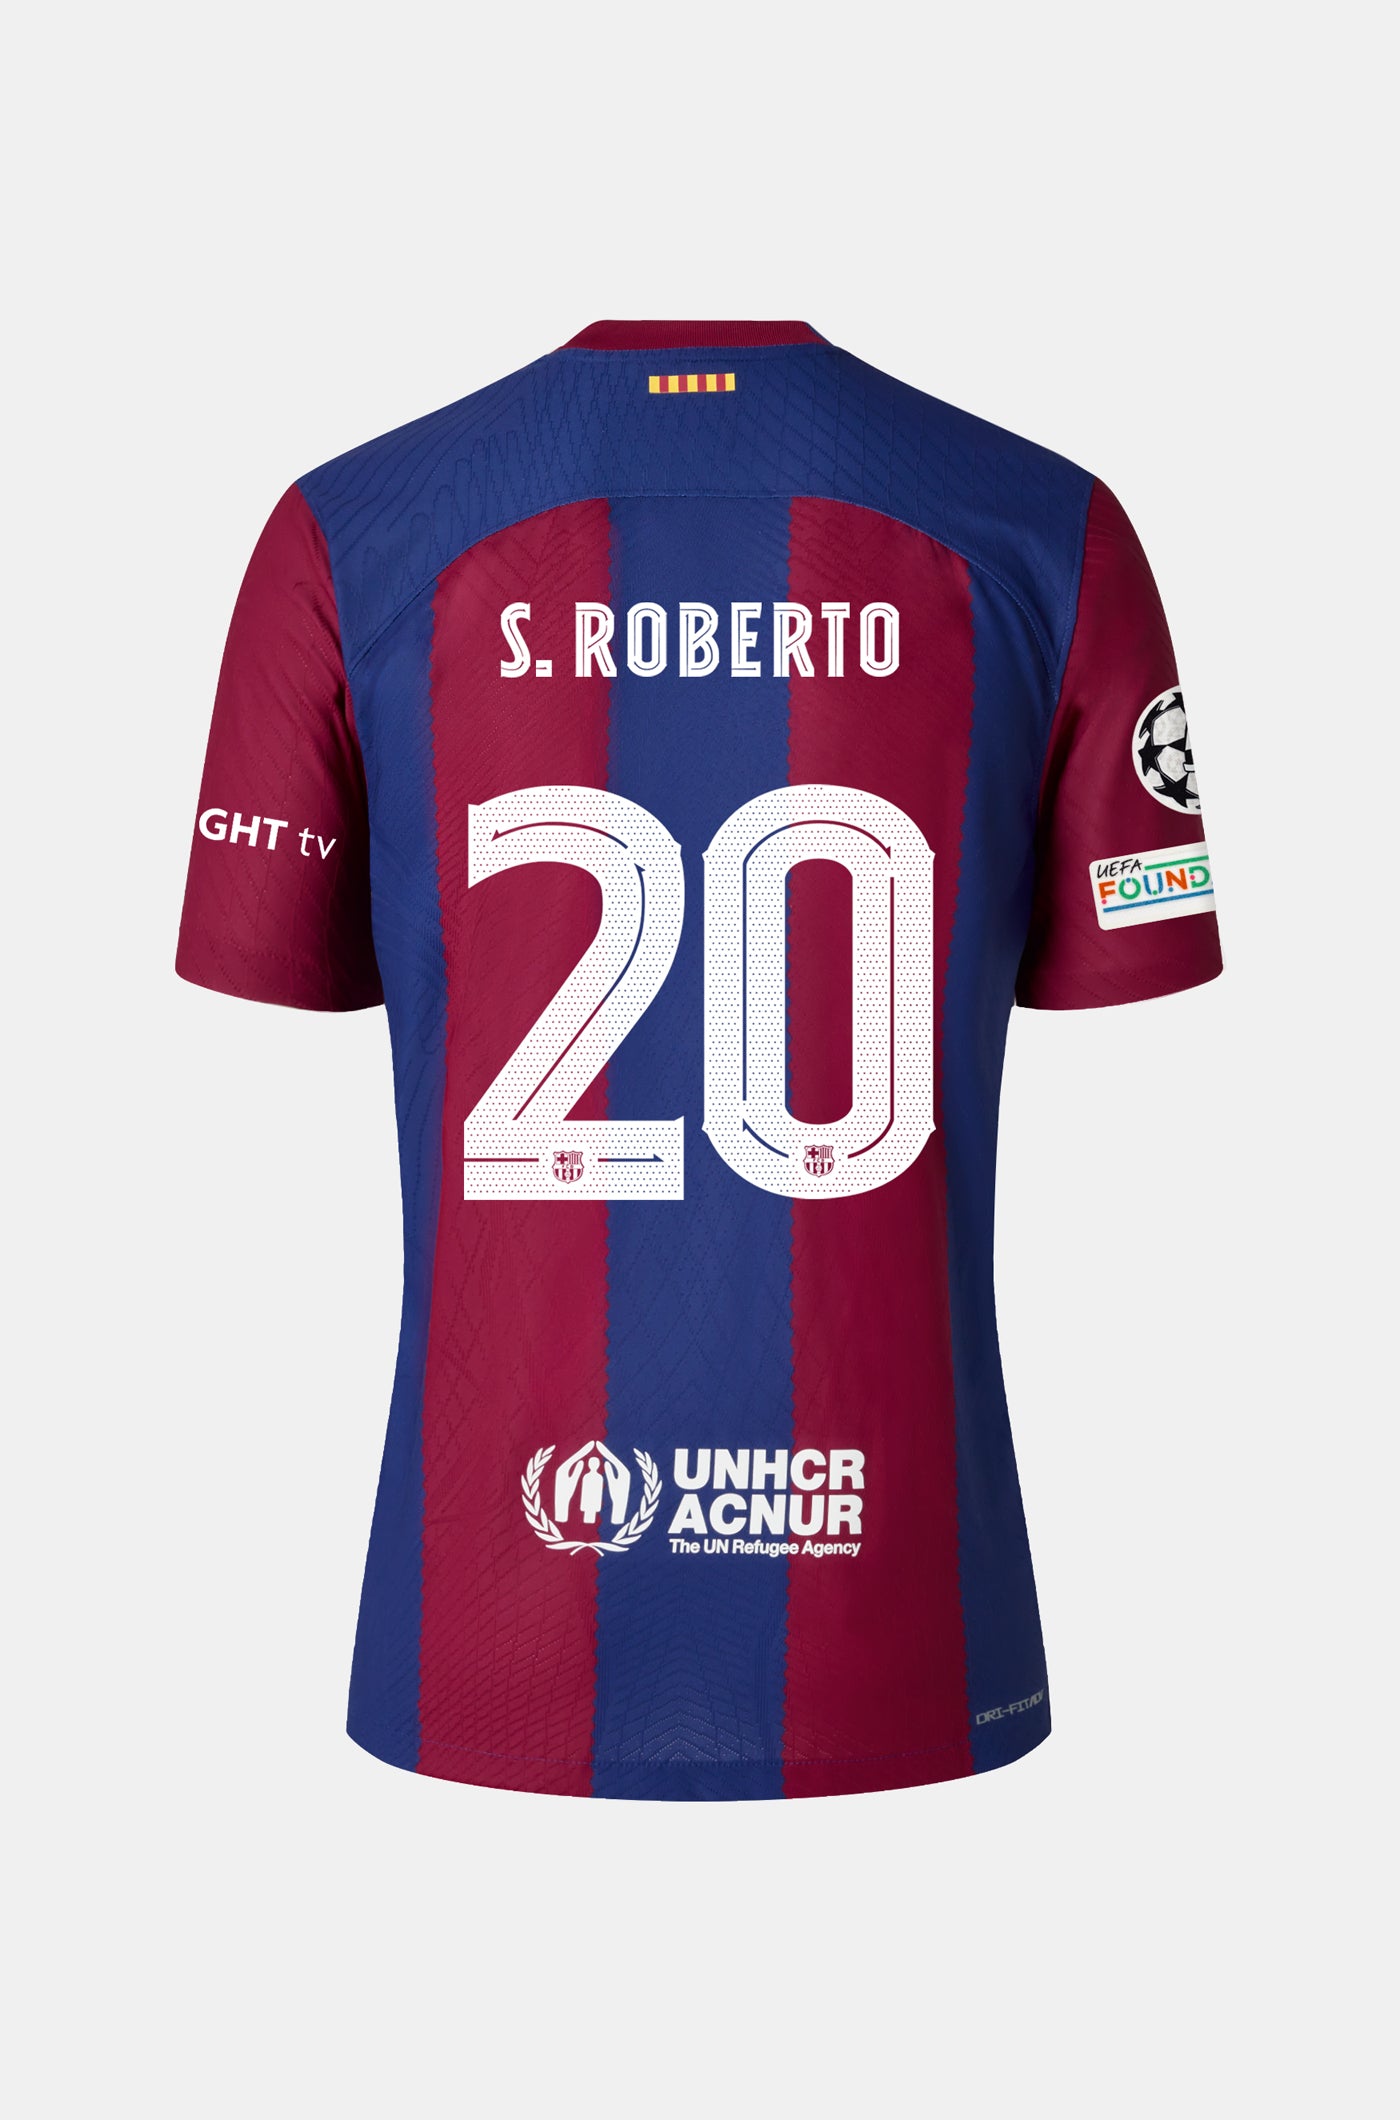 UCL FC Barcelona home shirt 23/24 - Long-sleeve - S. ROBERTO